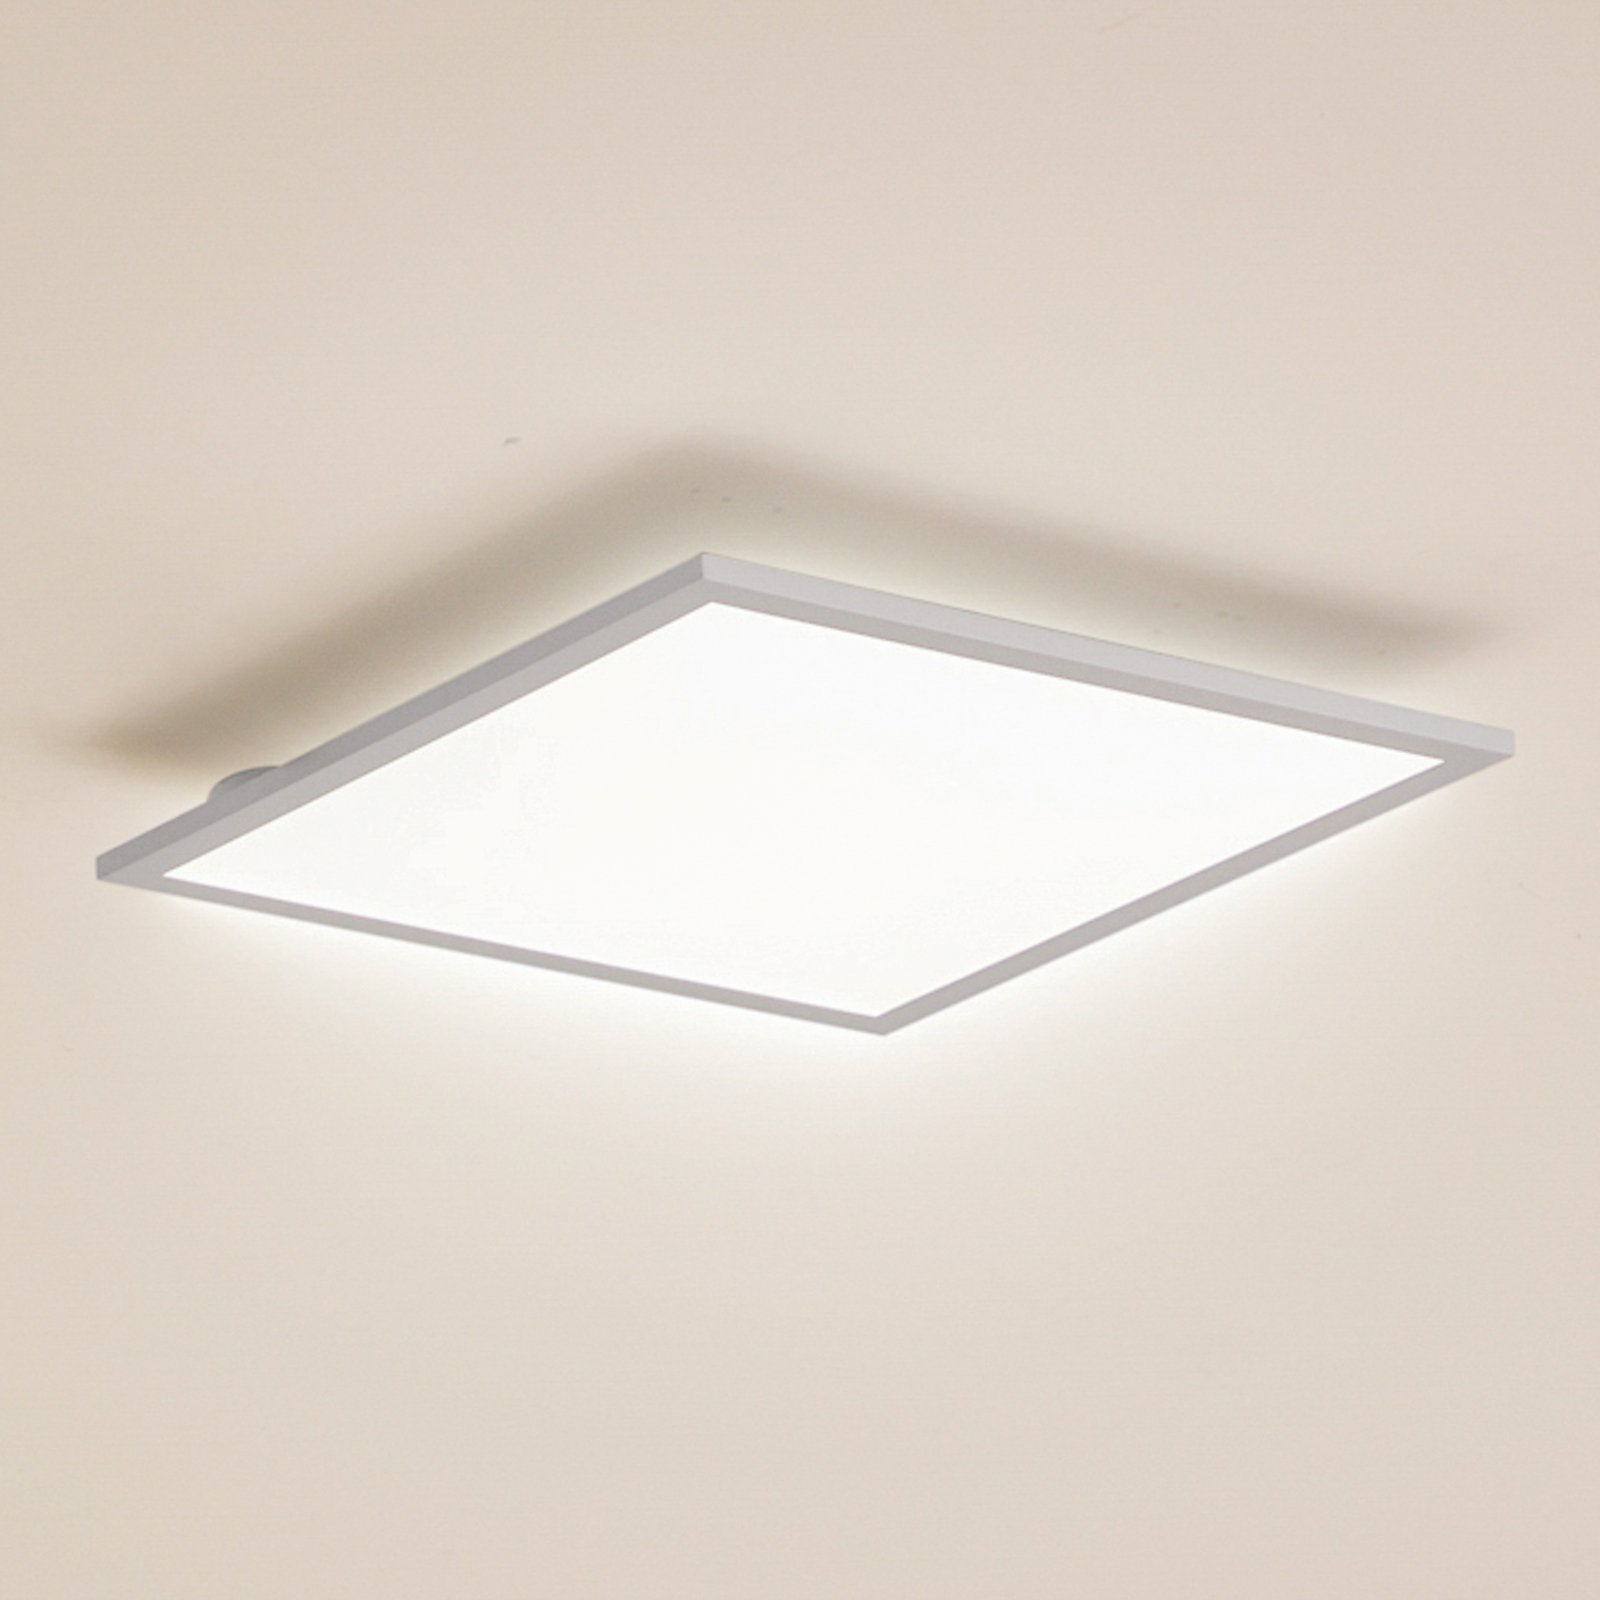 Lindby LED-panel Enhife, hvid, 39,5 x 39,5 cm, aluminium